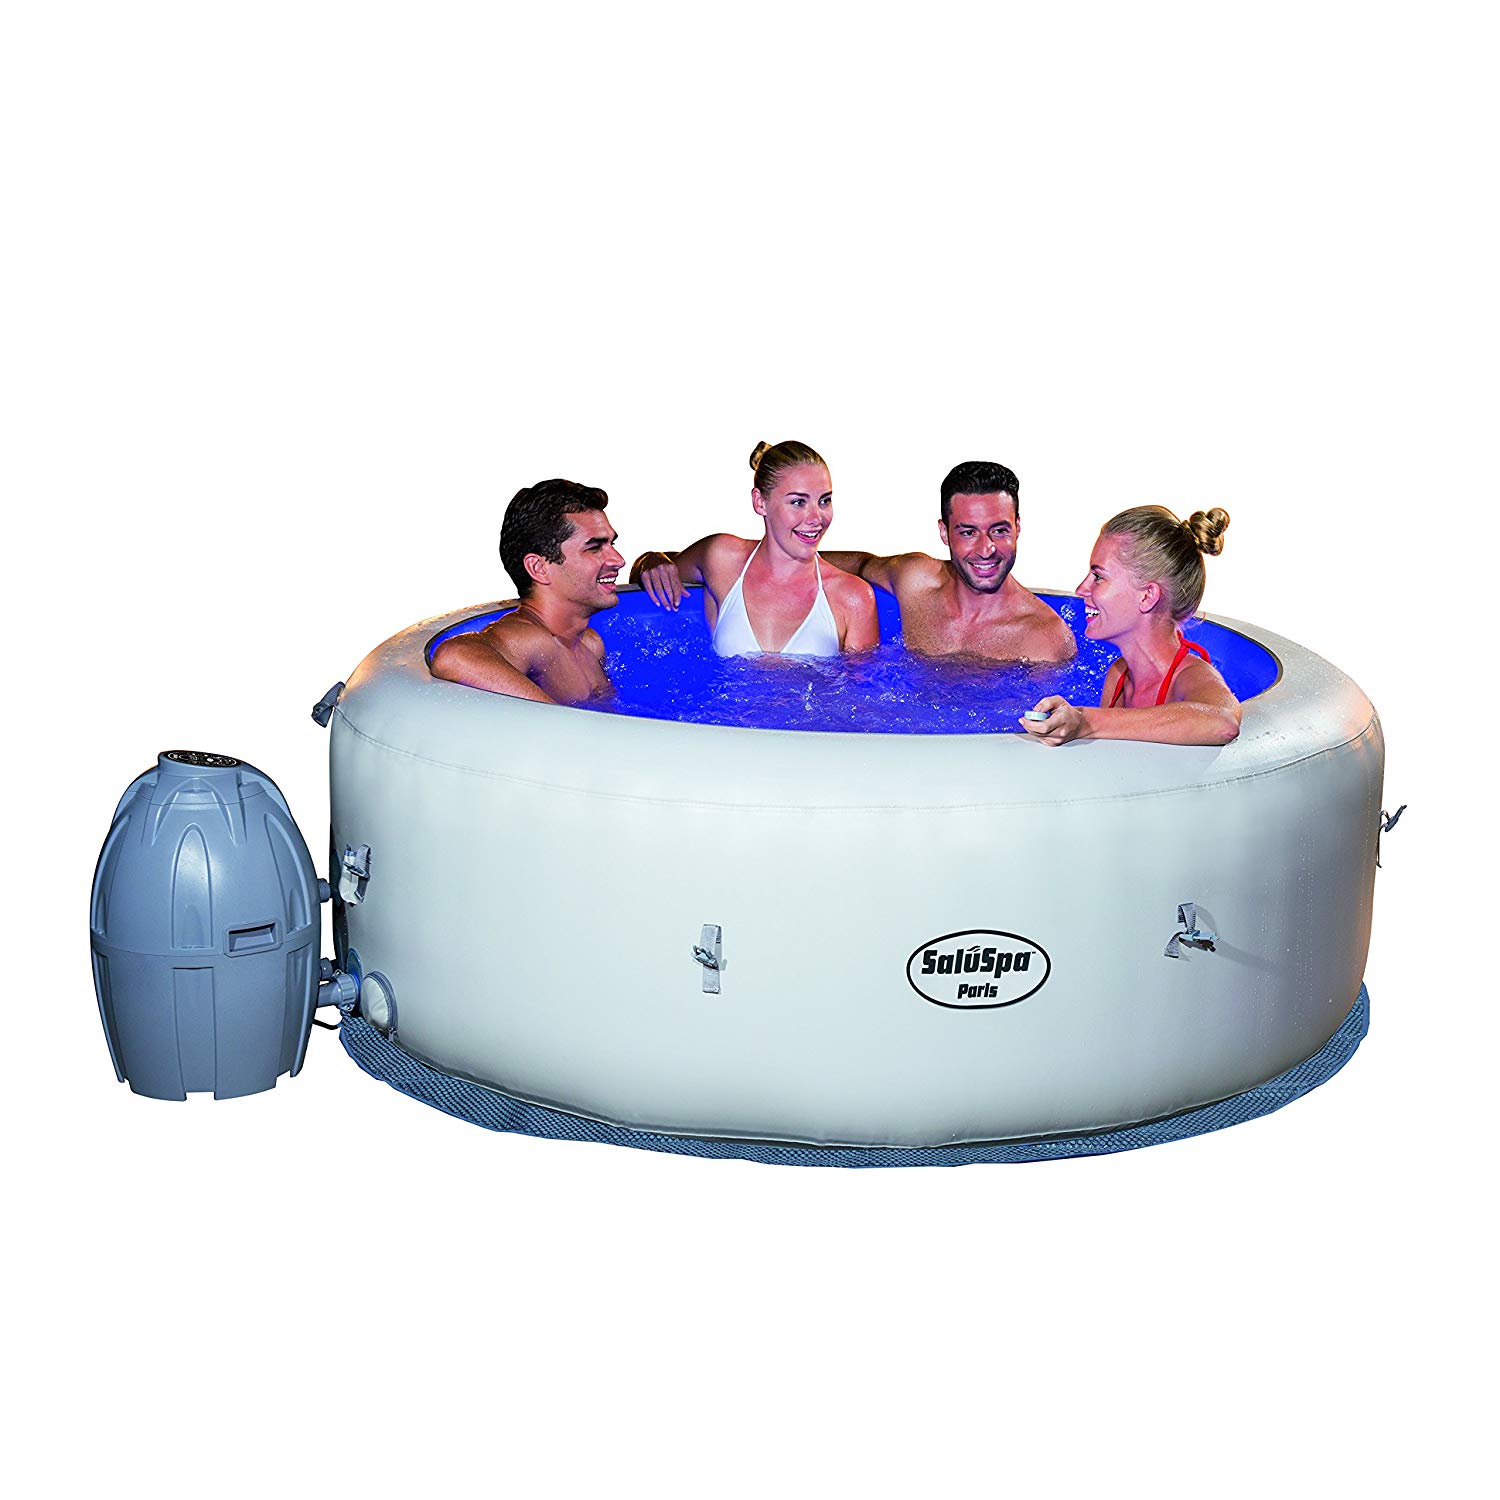 Bestway saluspa Paris air jet inflatable hot tub w/LED light show